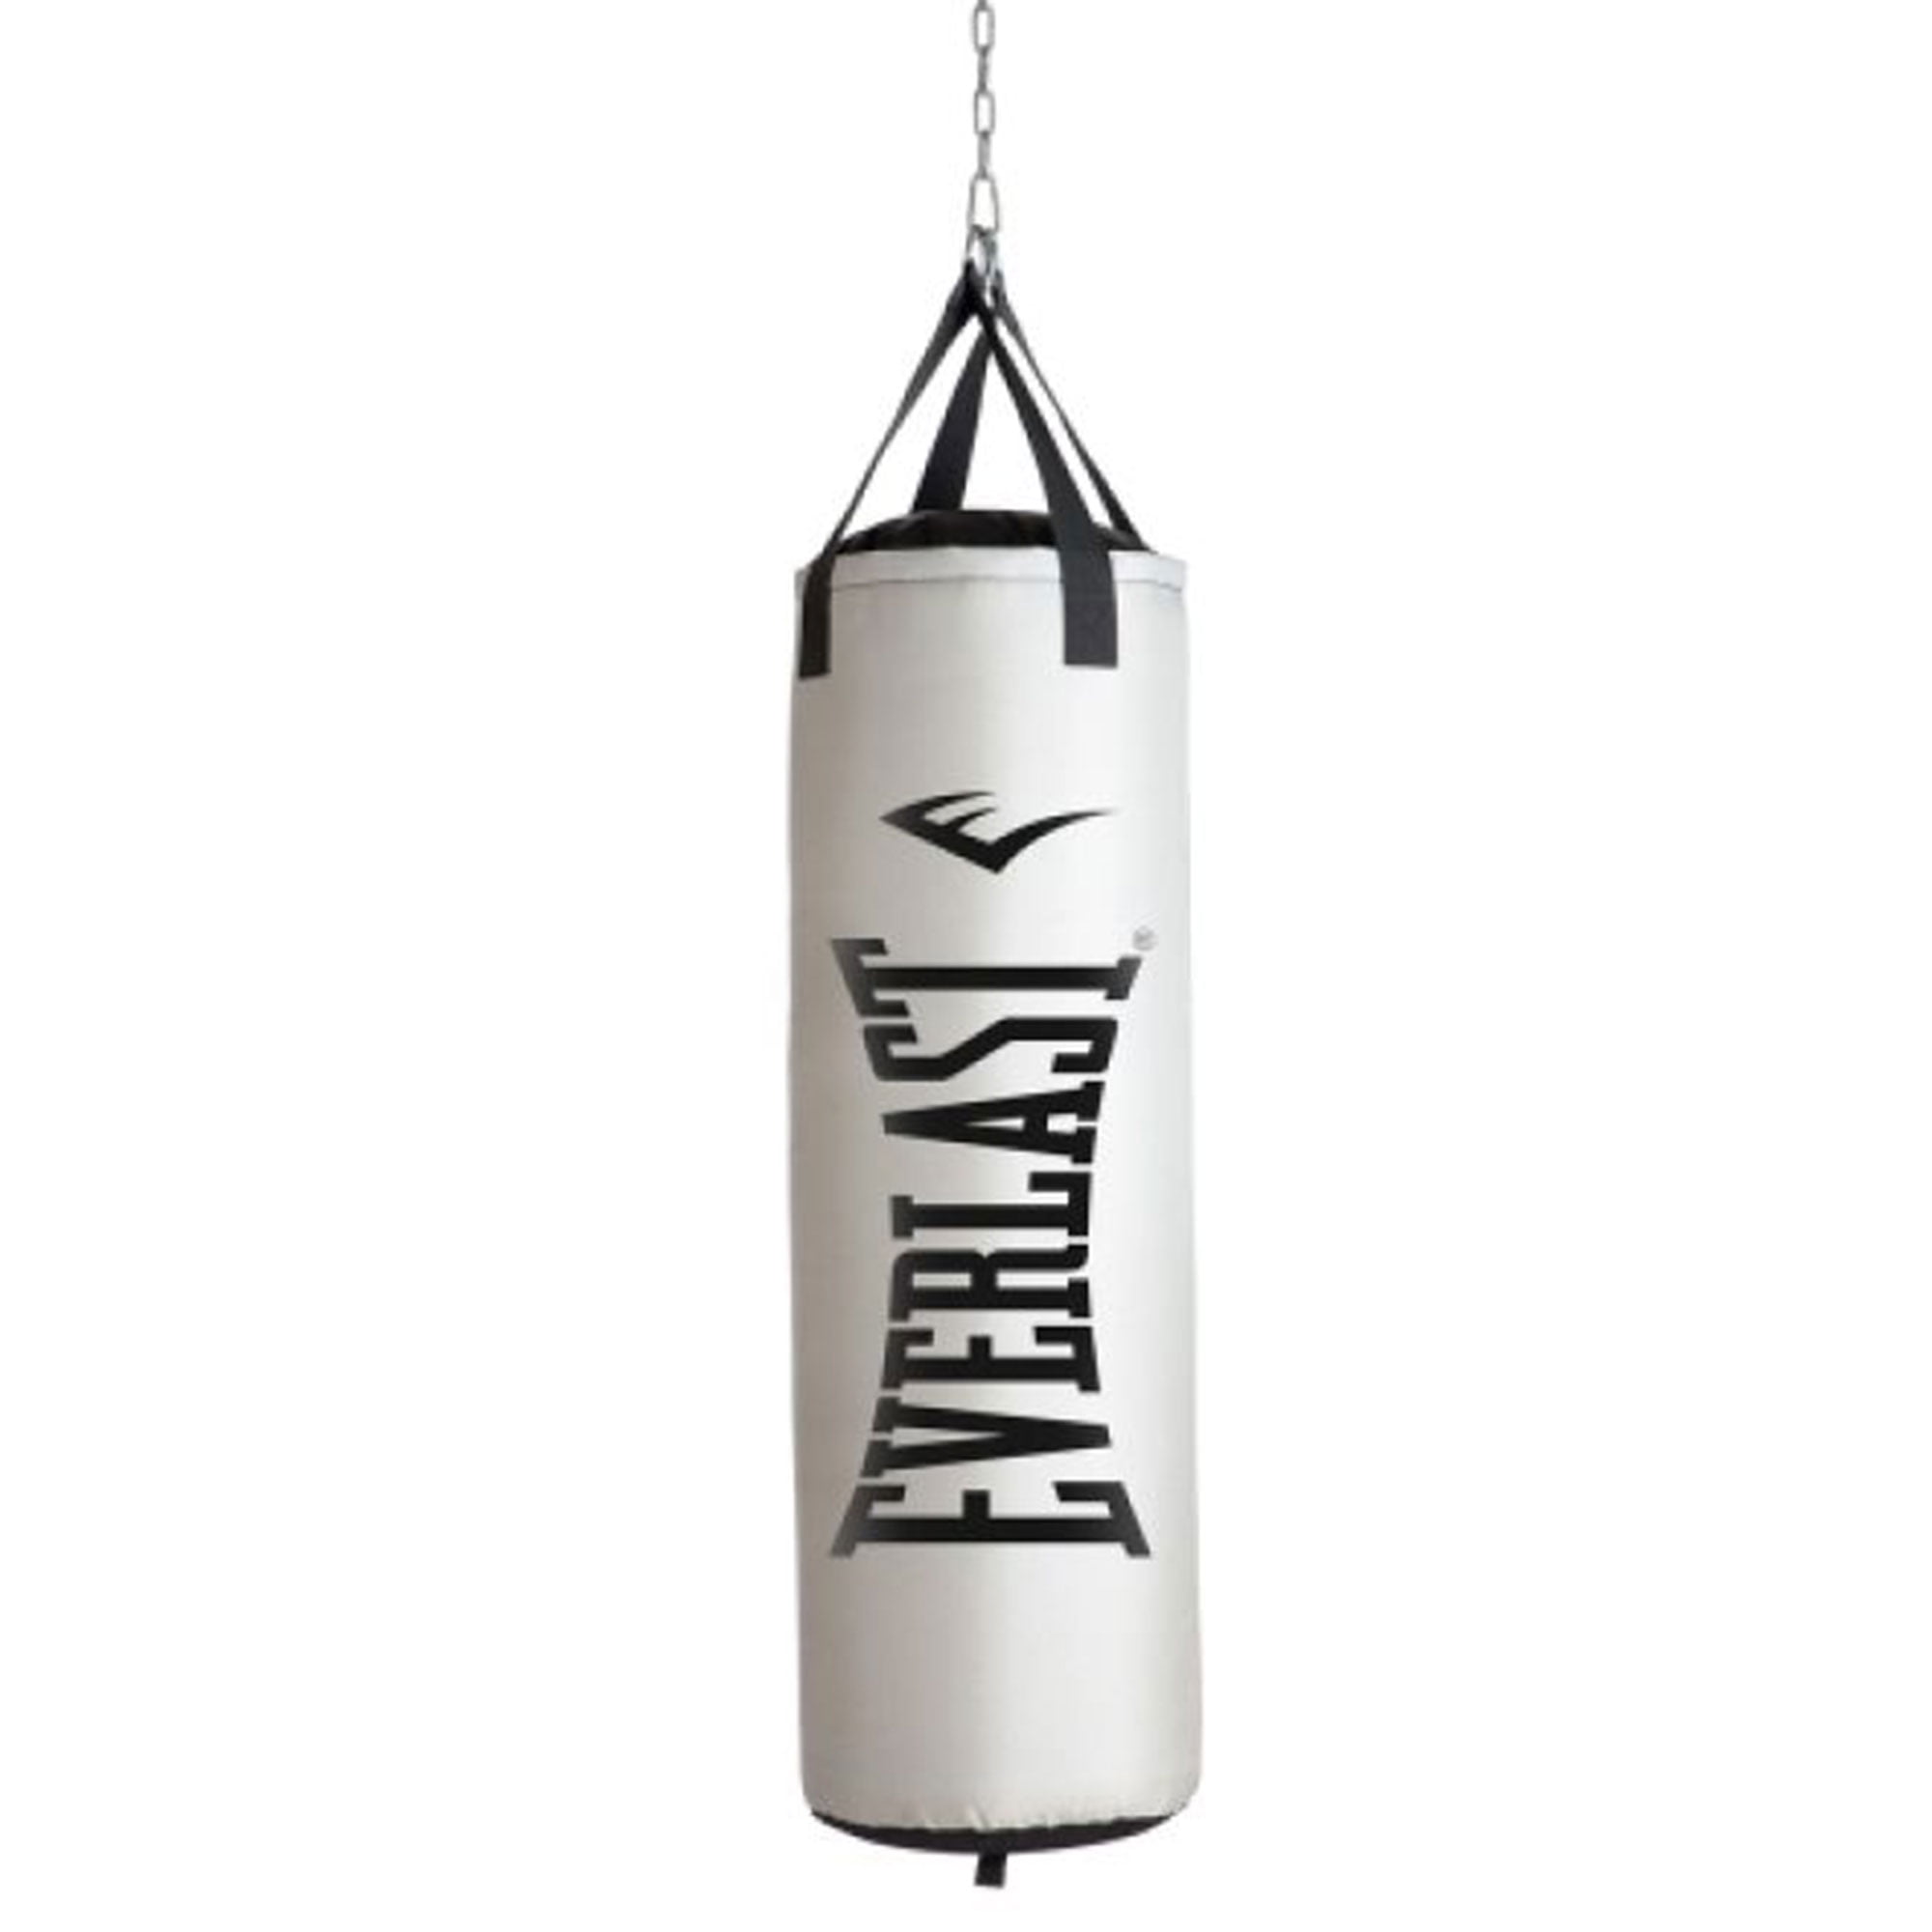 Boxing Everlast Omni Heavy 80 Pound Strike Heavy Bag Training Exercise Fitness 